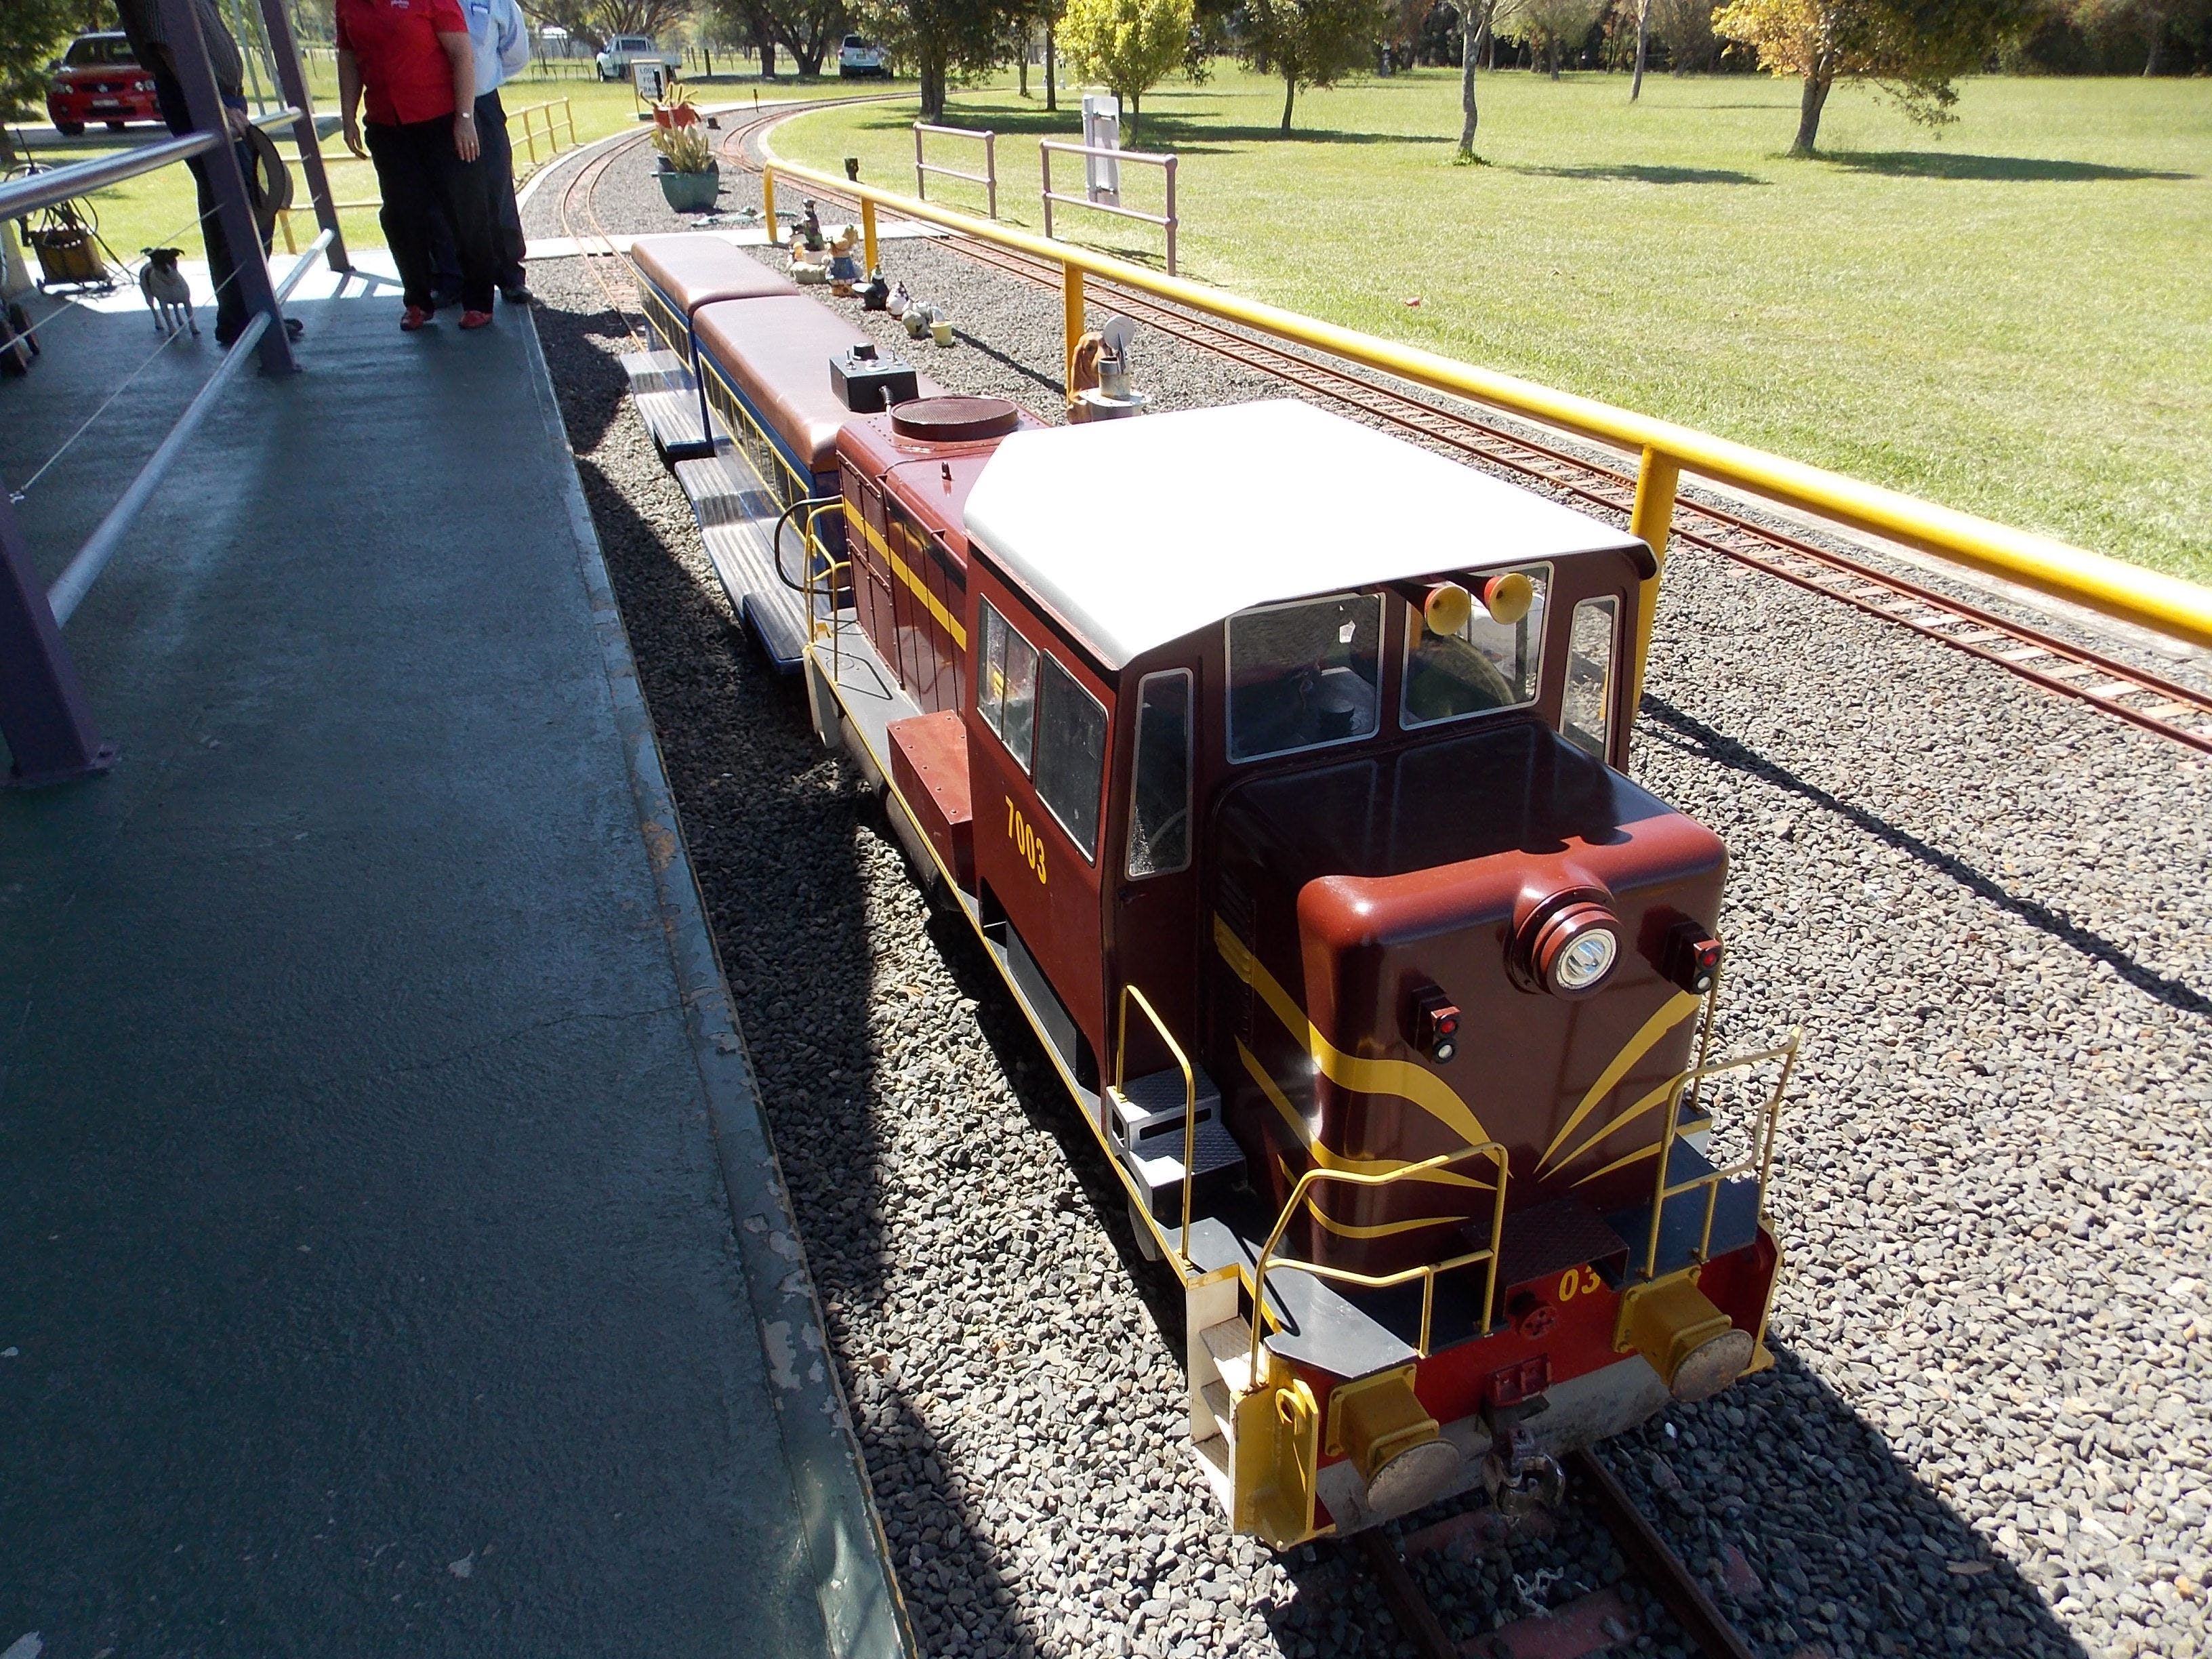 Penwood Miniature Railway - Nambucca Heads Accommodation